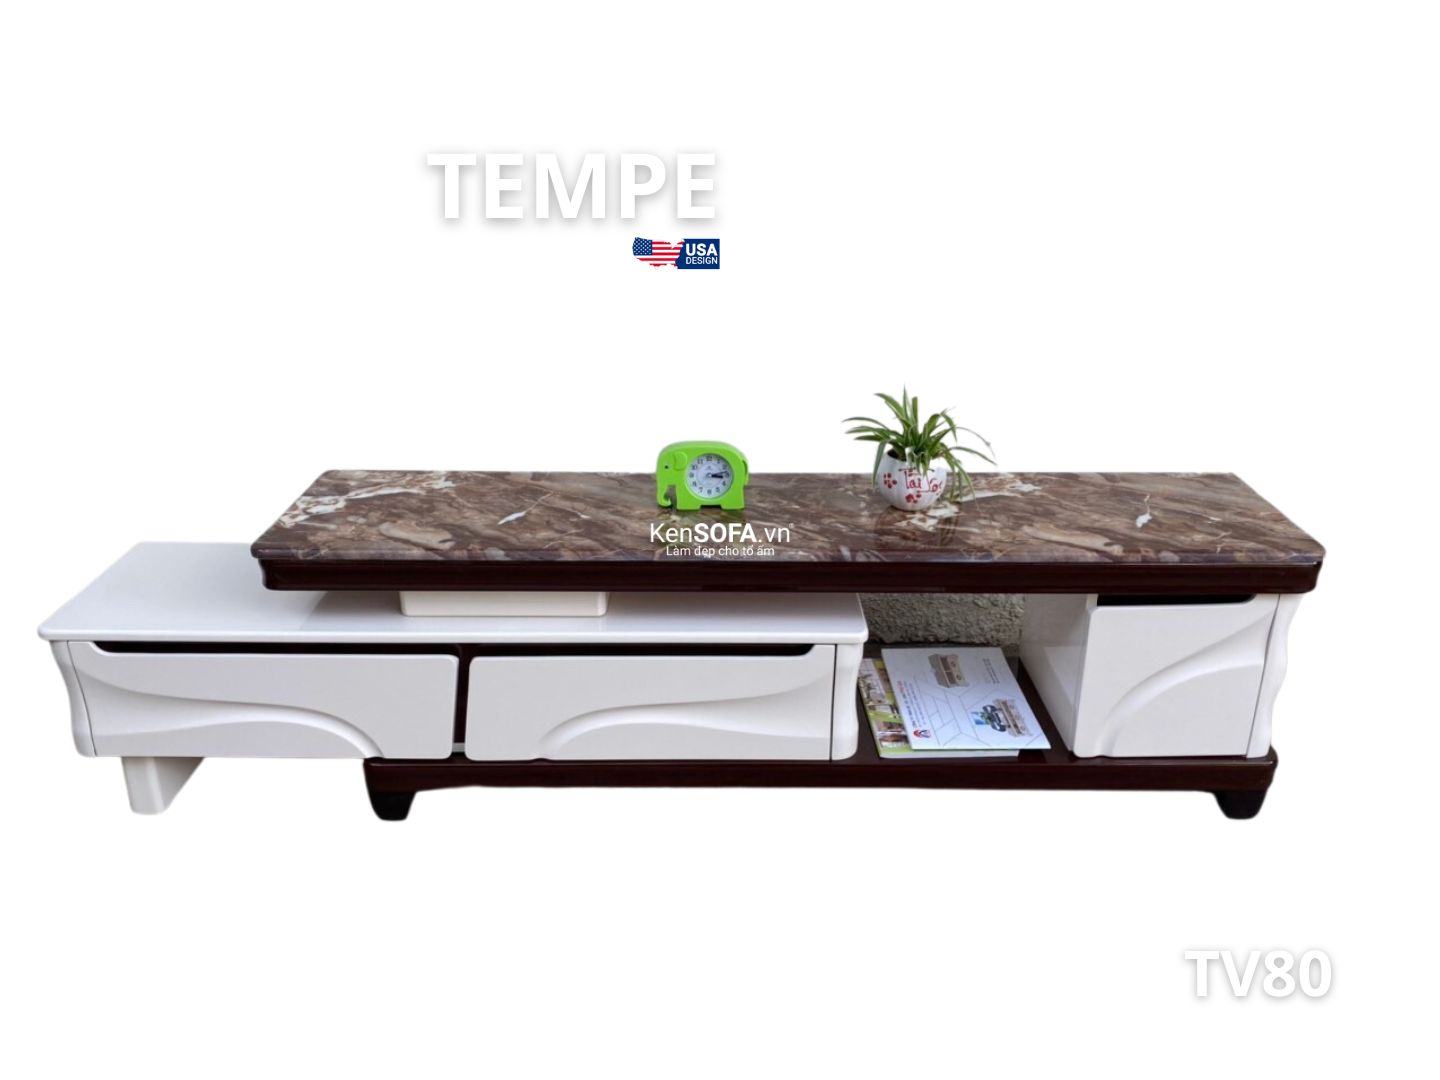 Kệ Tivi mặt đá TV80 Tempe nhập khẩu - Kệ TiVi - KenSOFA.vn